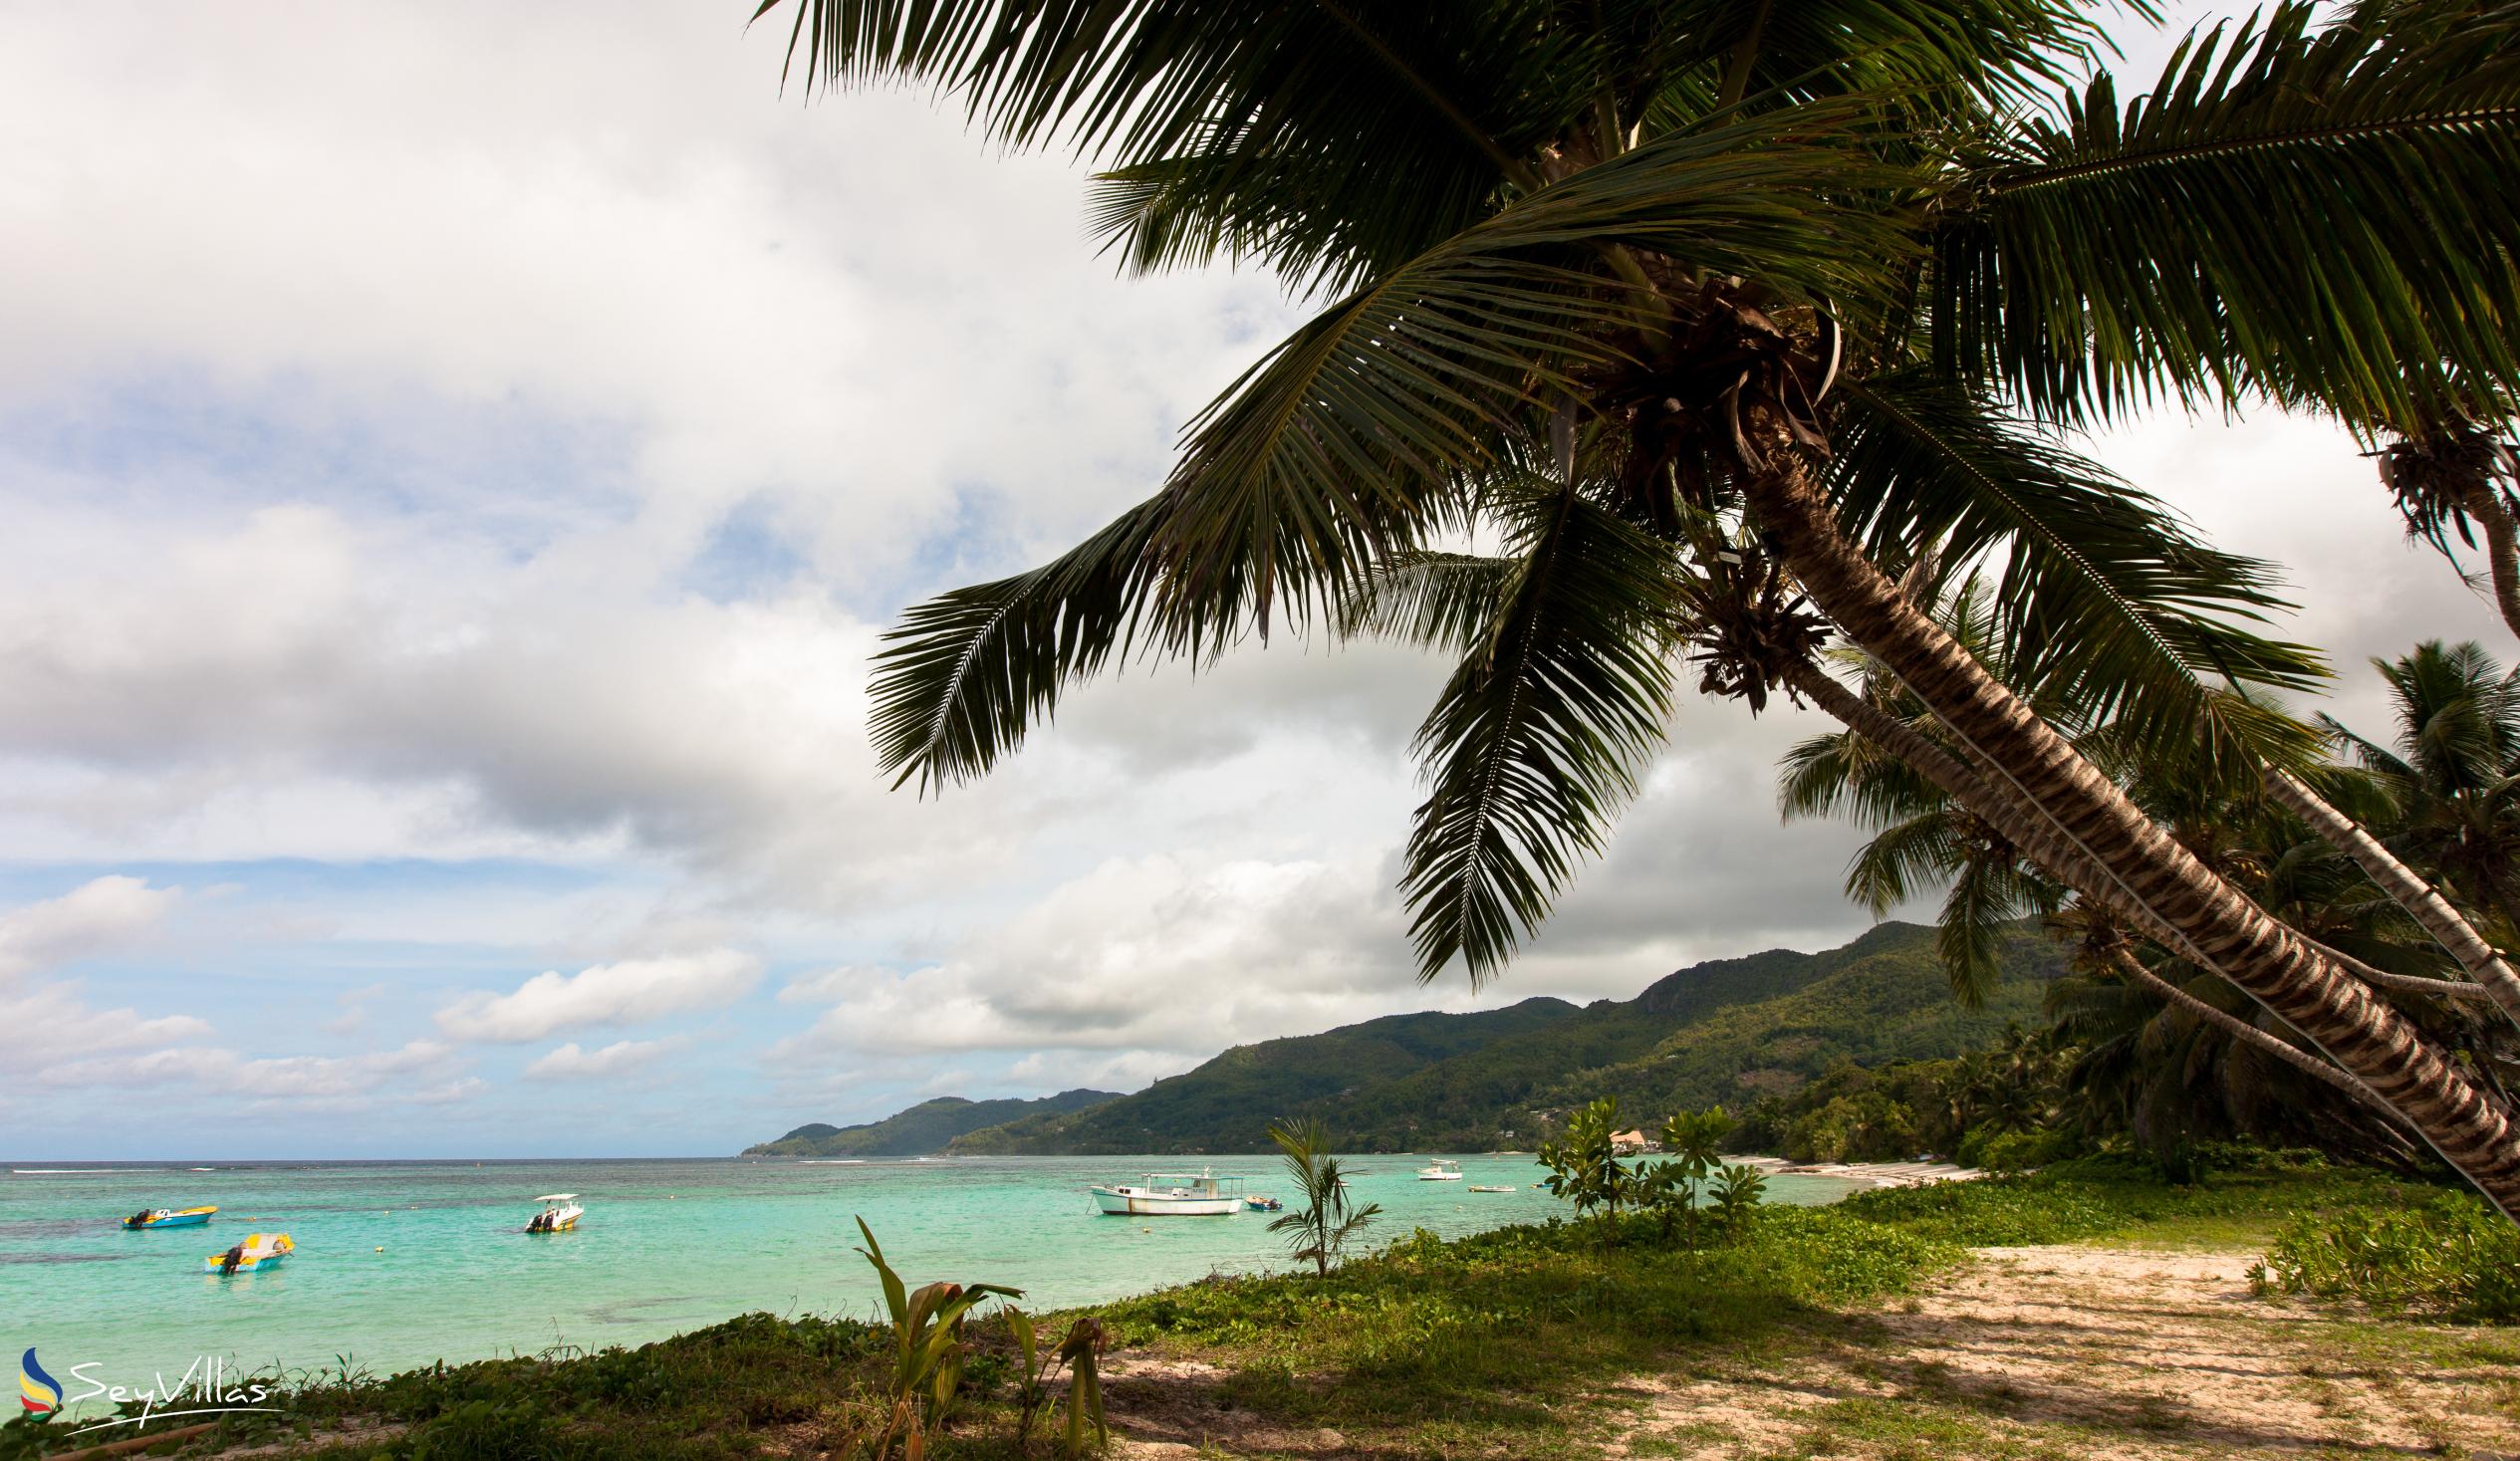 Foto 16: La Villa Therese Holiday Apartments - Plages - Mahé (Seychelles)